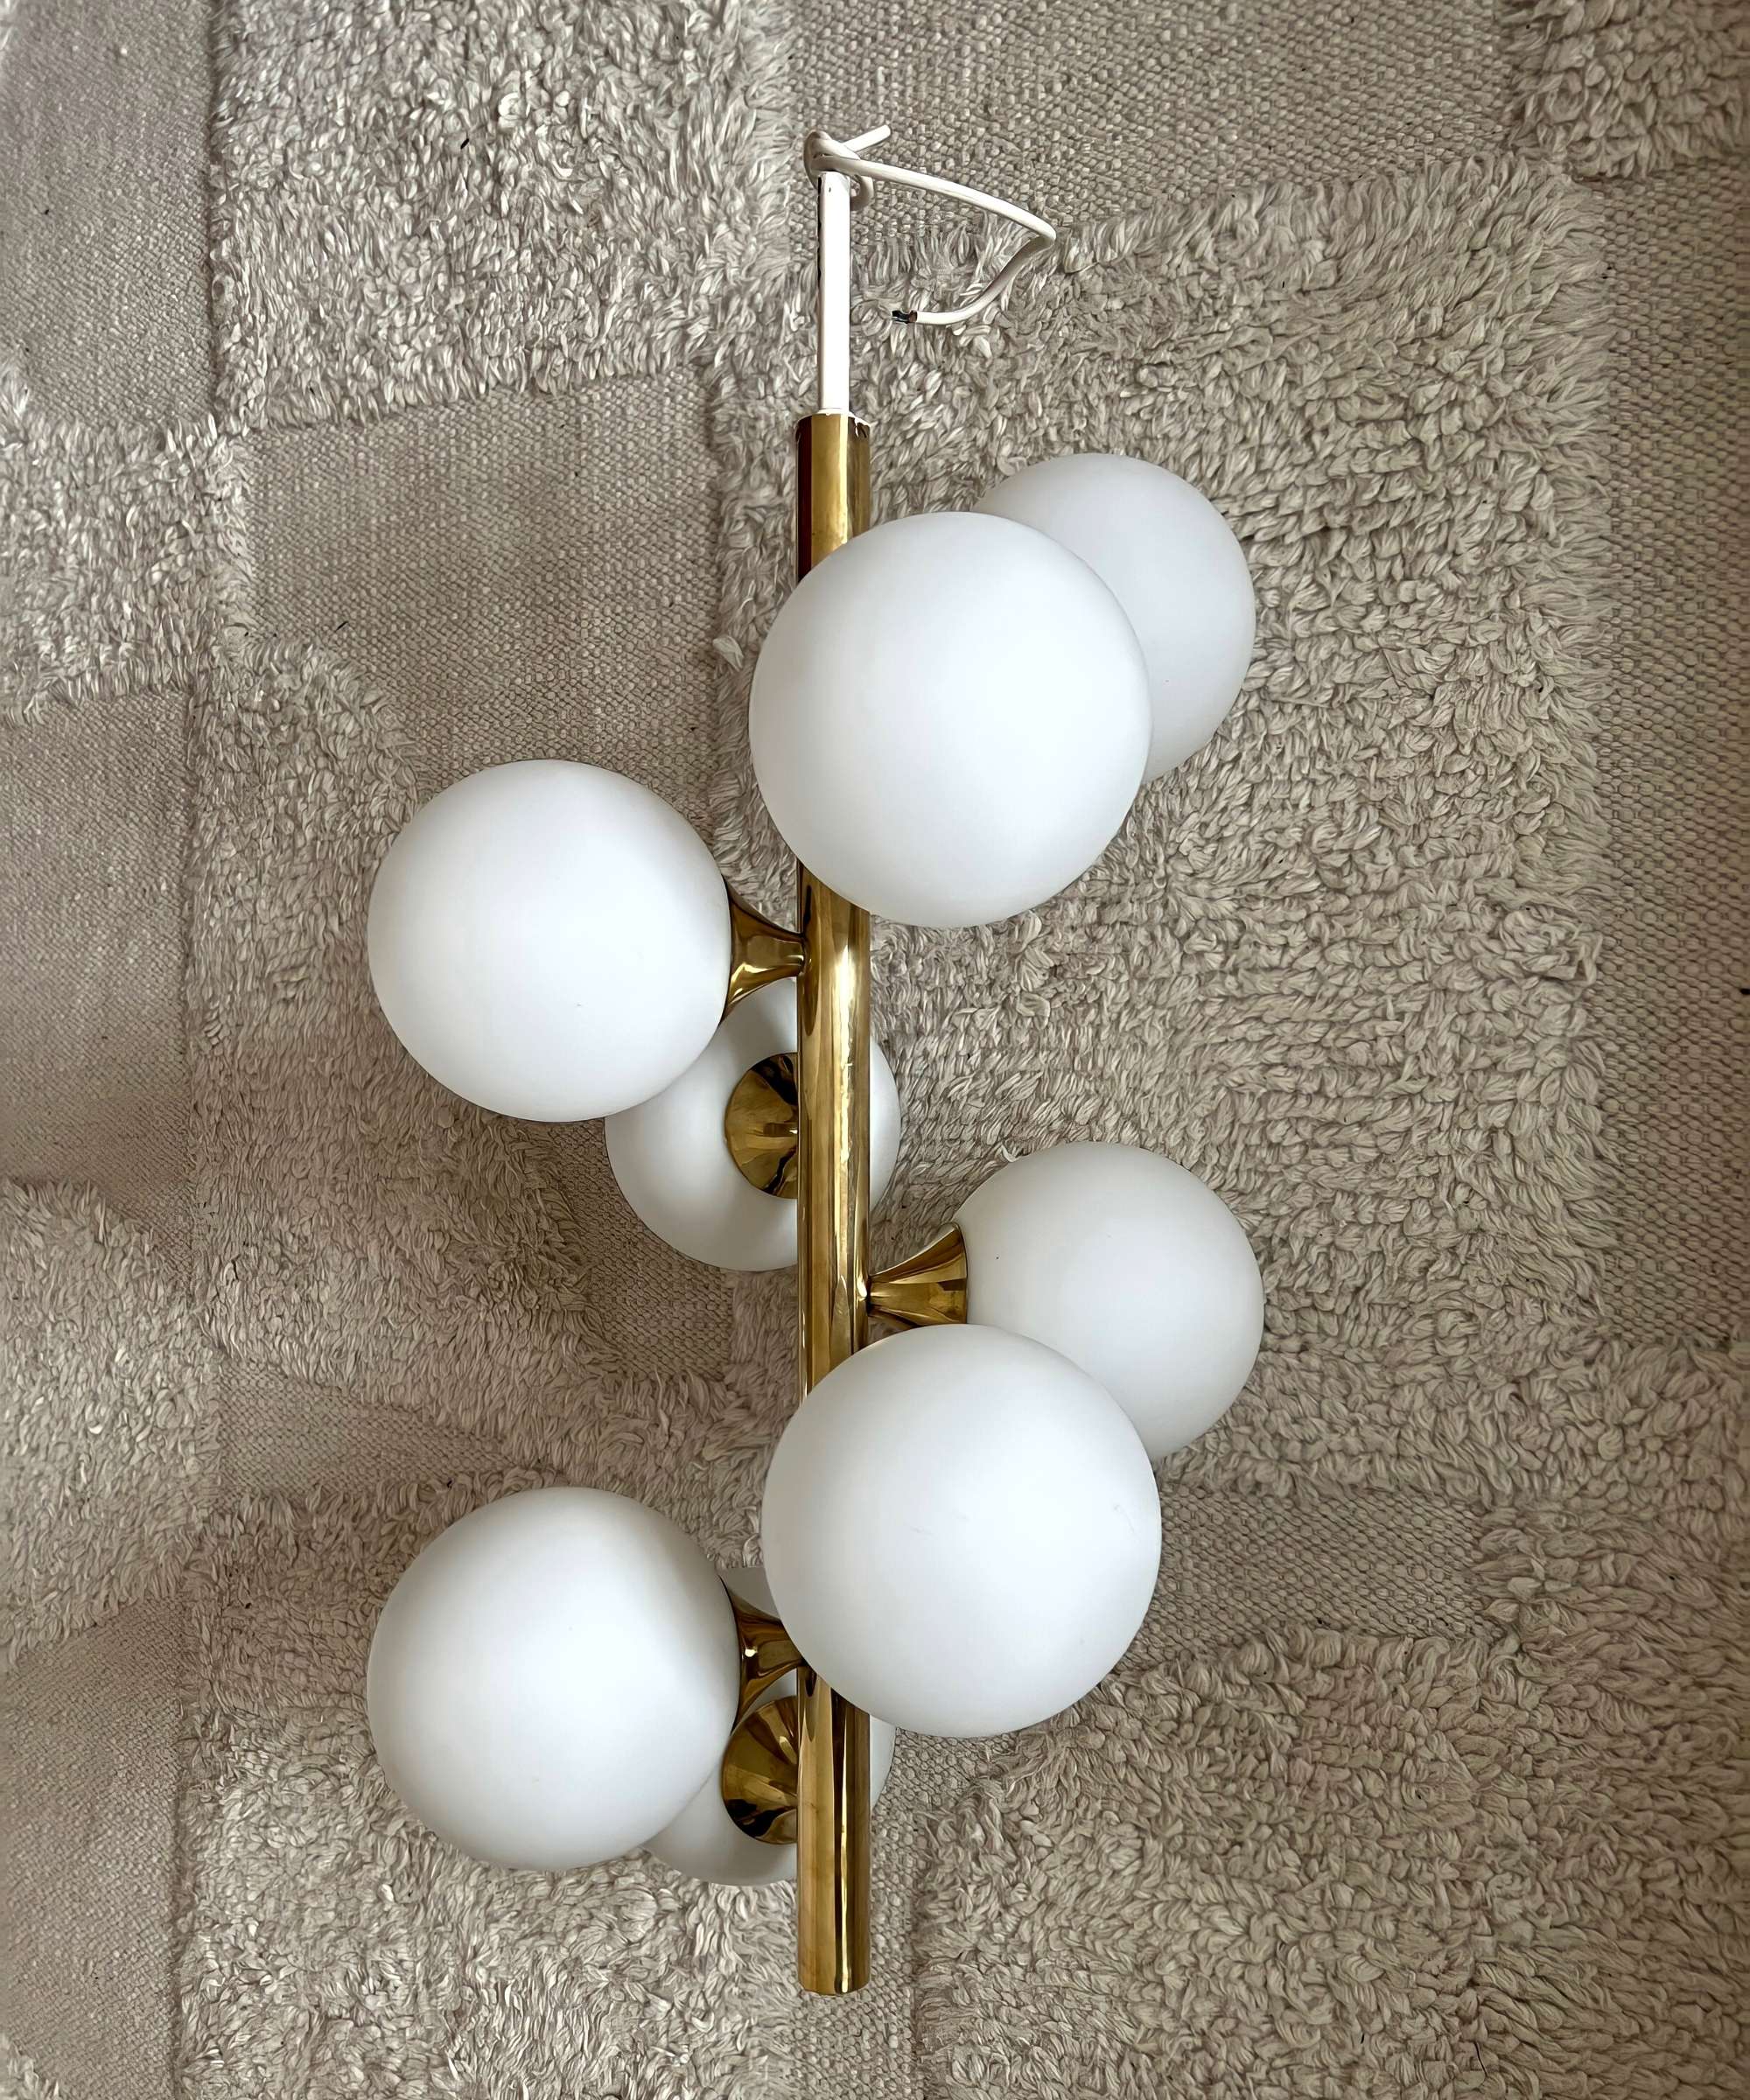 Seltene 70er Midcentury Messing Kugellampe Gold / Weiß